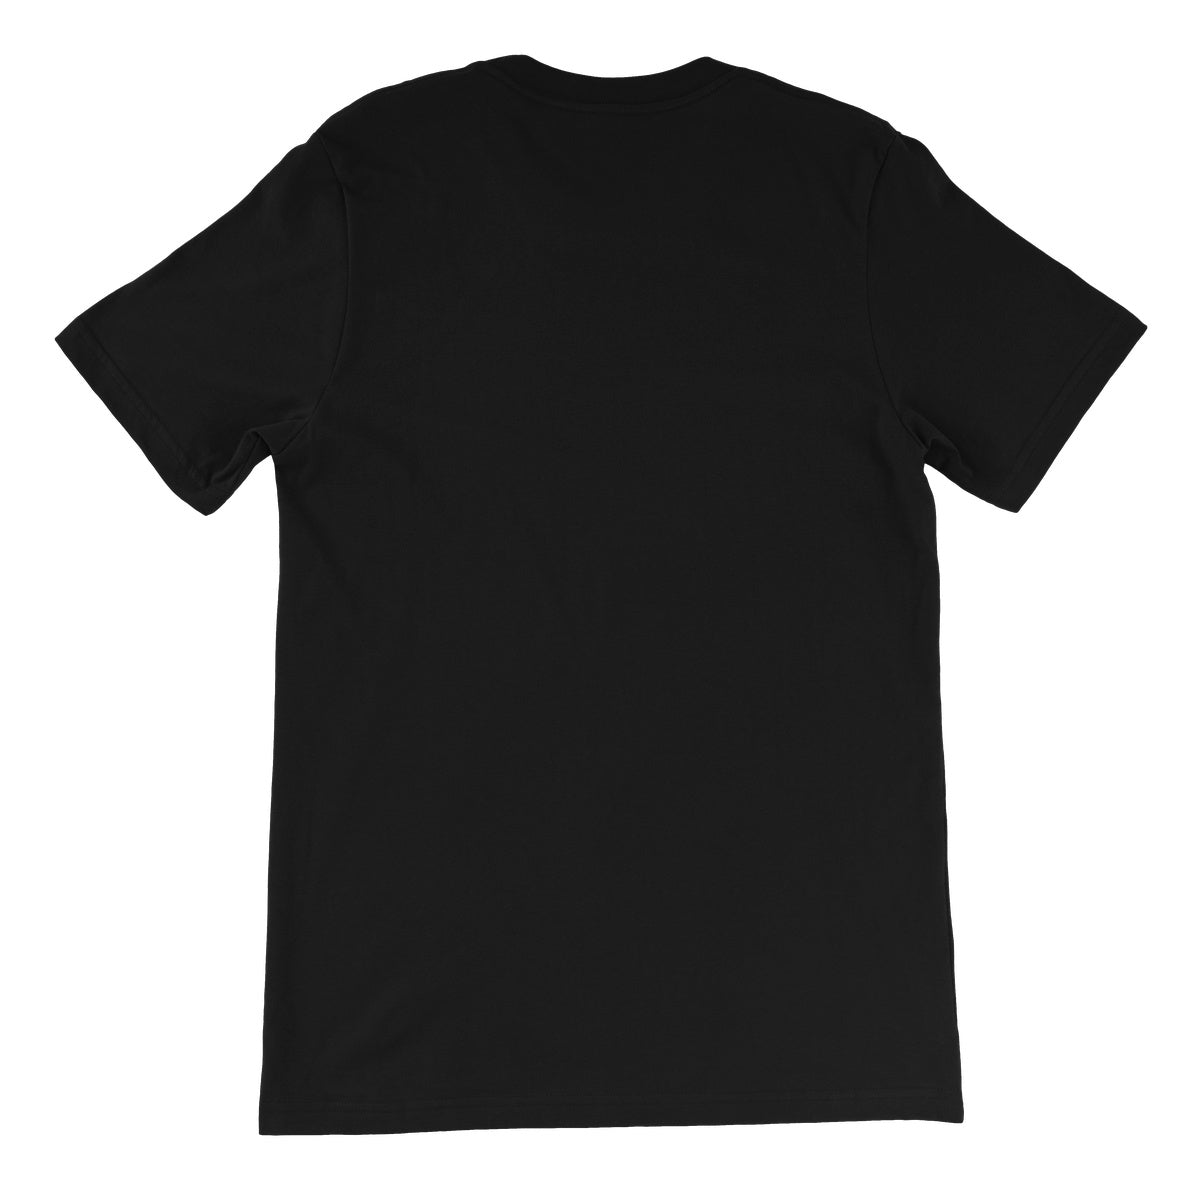 GRAPS X Gaijin - Fighting Spirit Unisex Short Sleeve T-Shirt